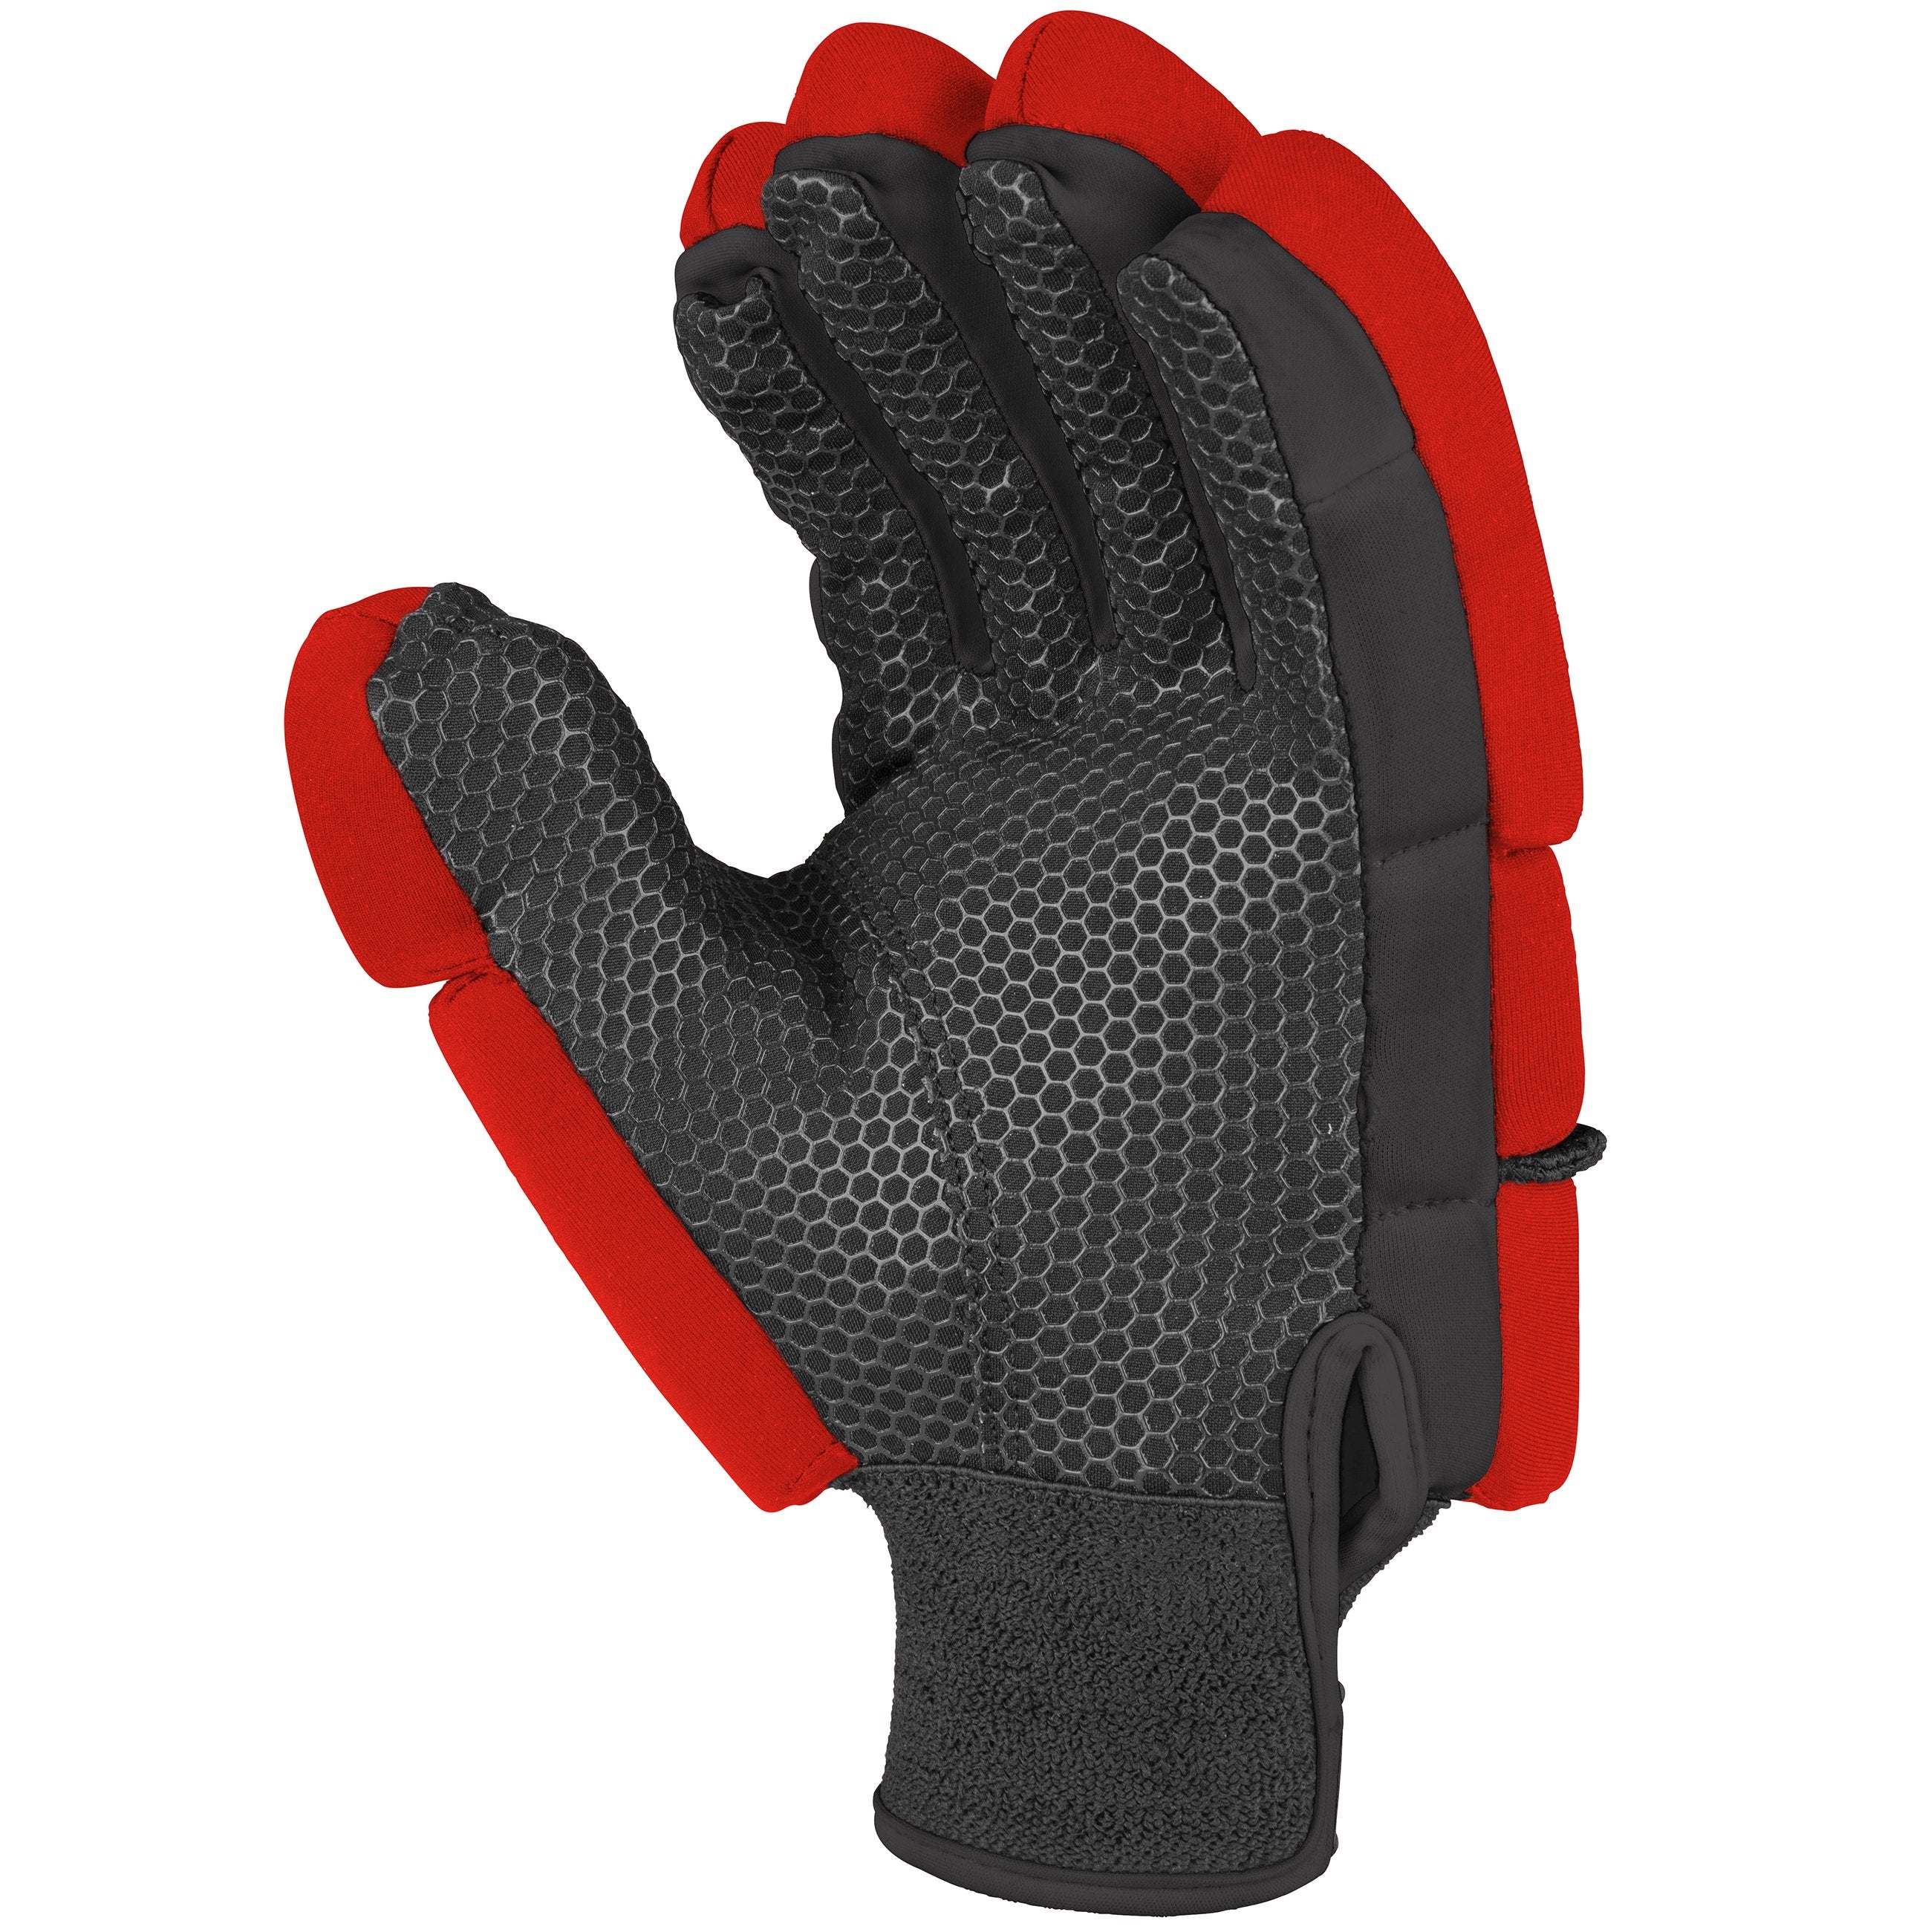 2600 HGBA20 6210805 Glove Proflex 1000 Black & Fluoro Red, Main Palm